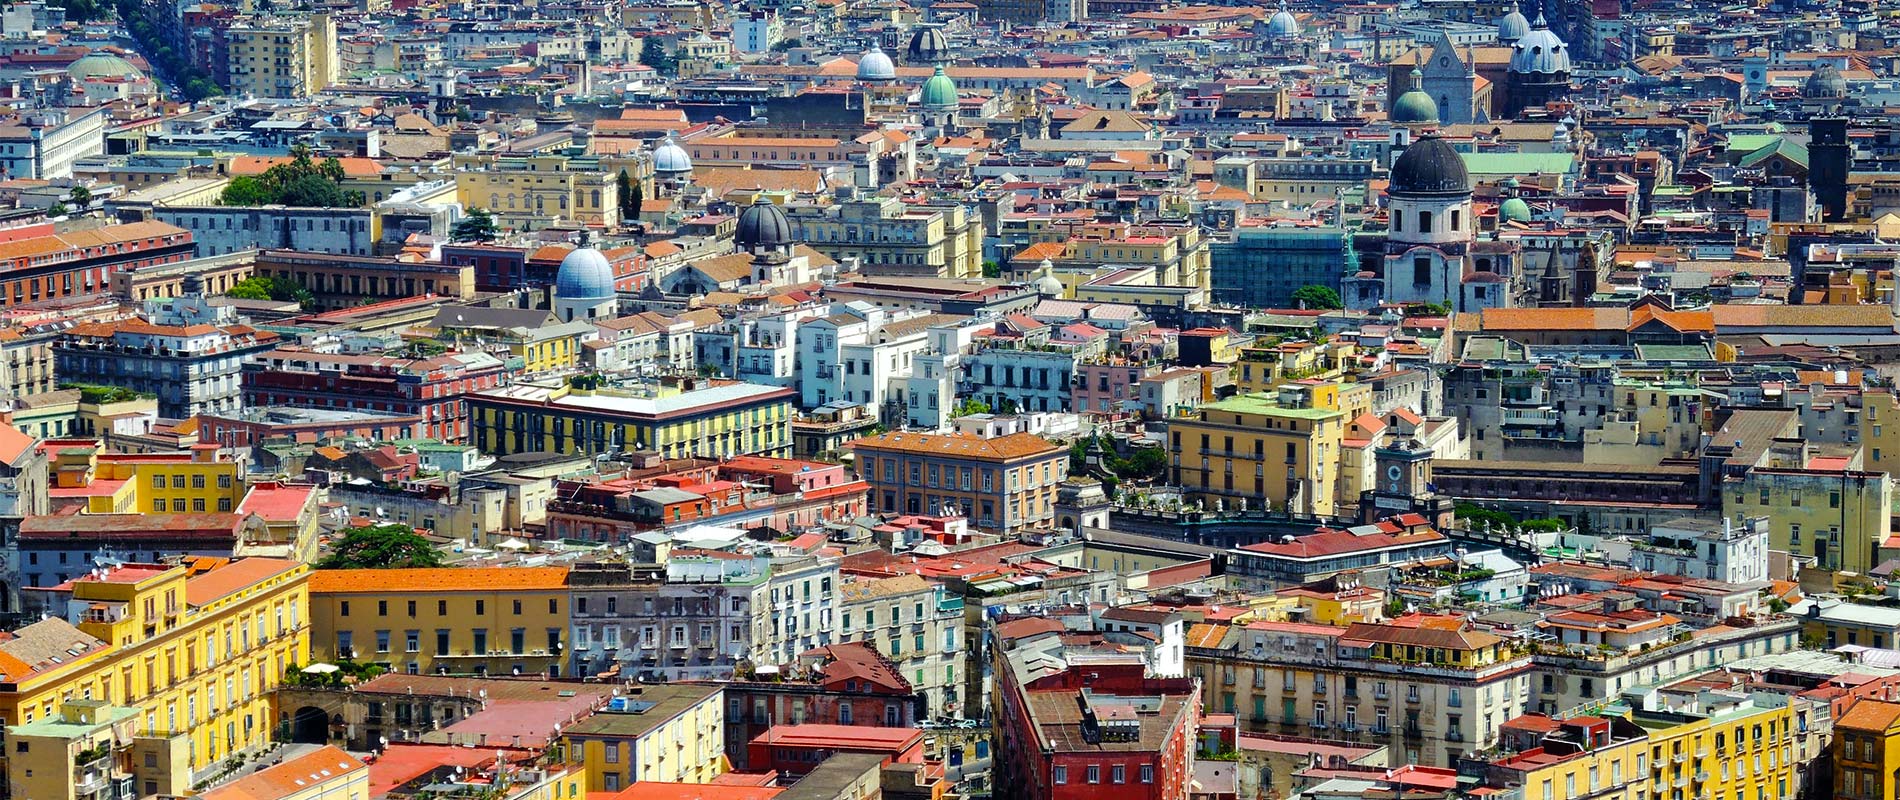 Napoli centro storico